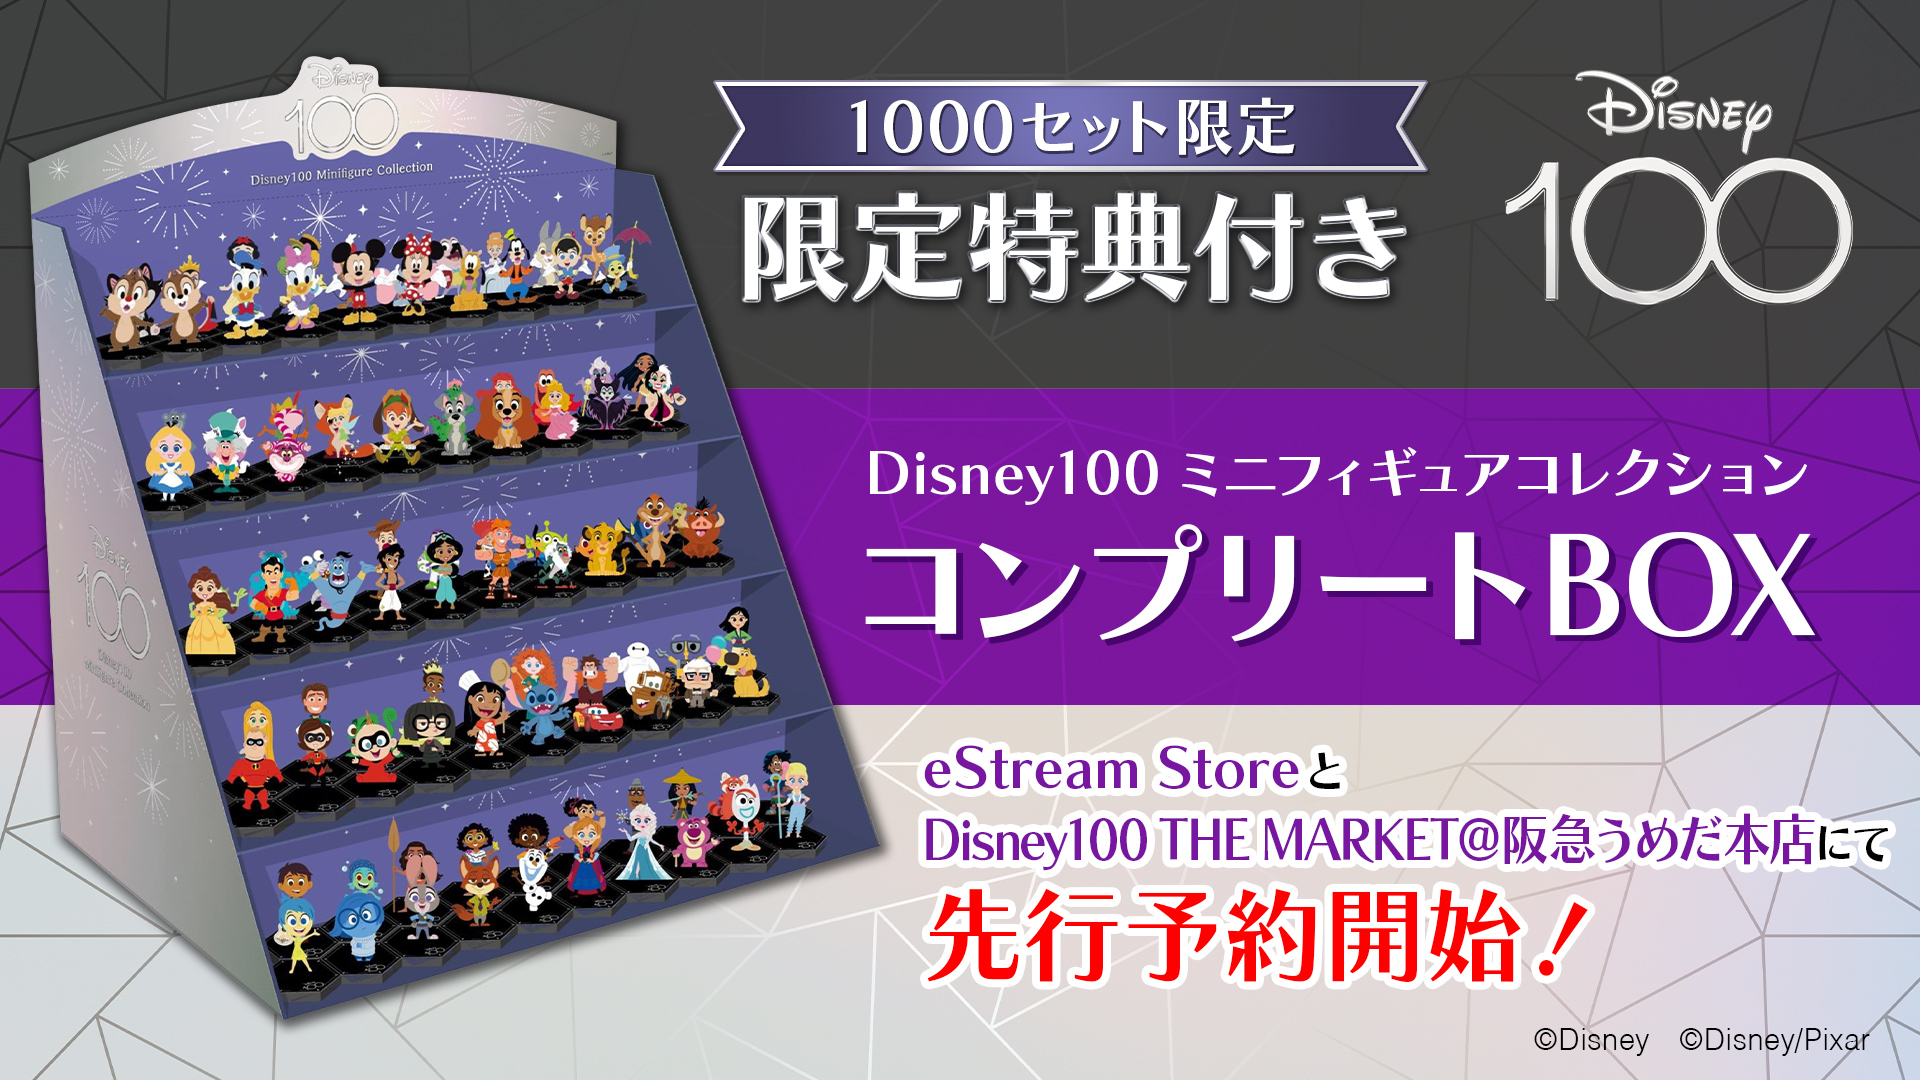 eStream、ディズニー創立100周年「Disney100」ミニフィギュア